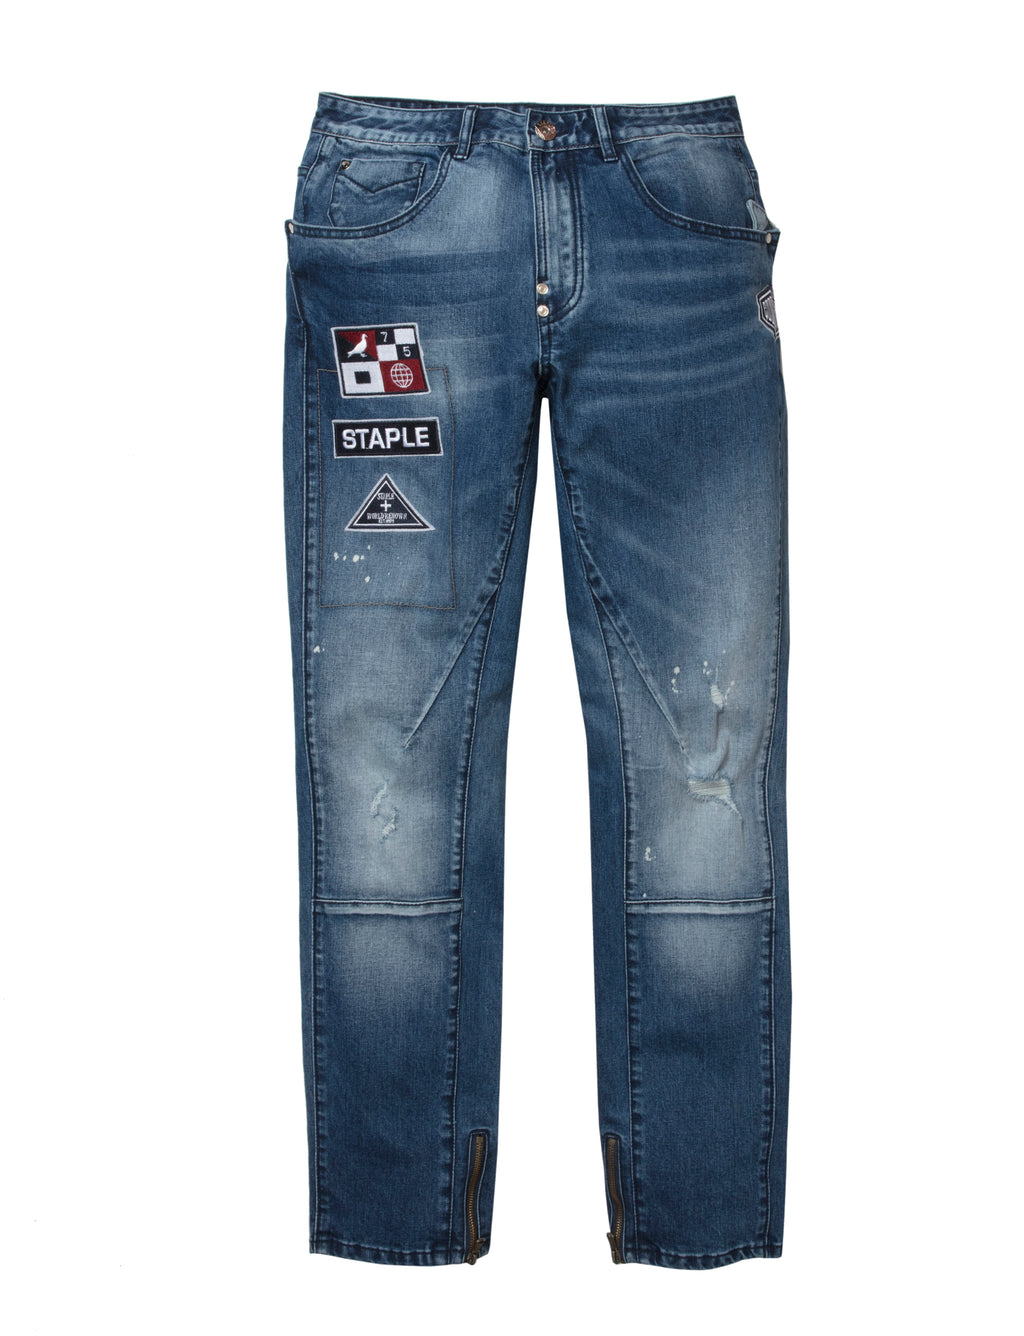 stapled jeans